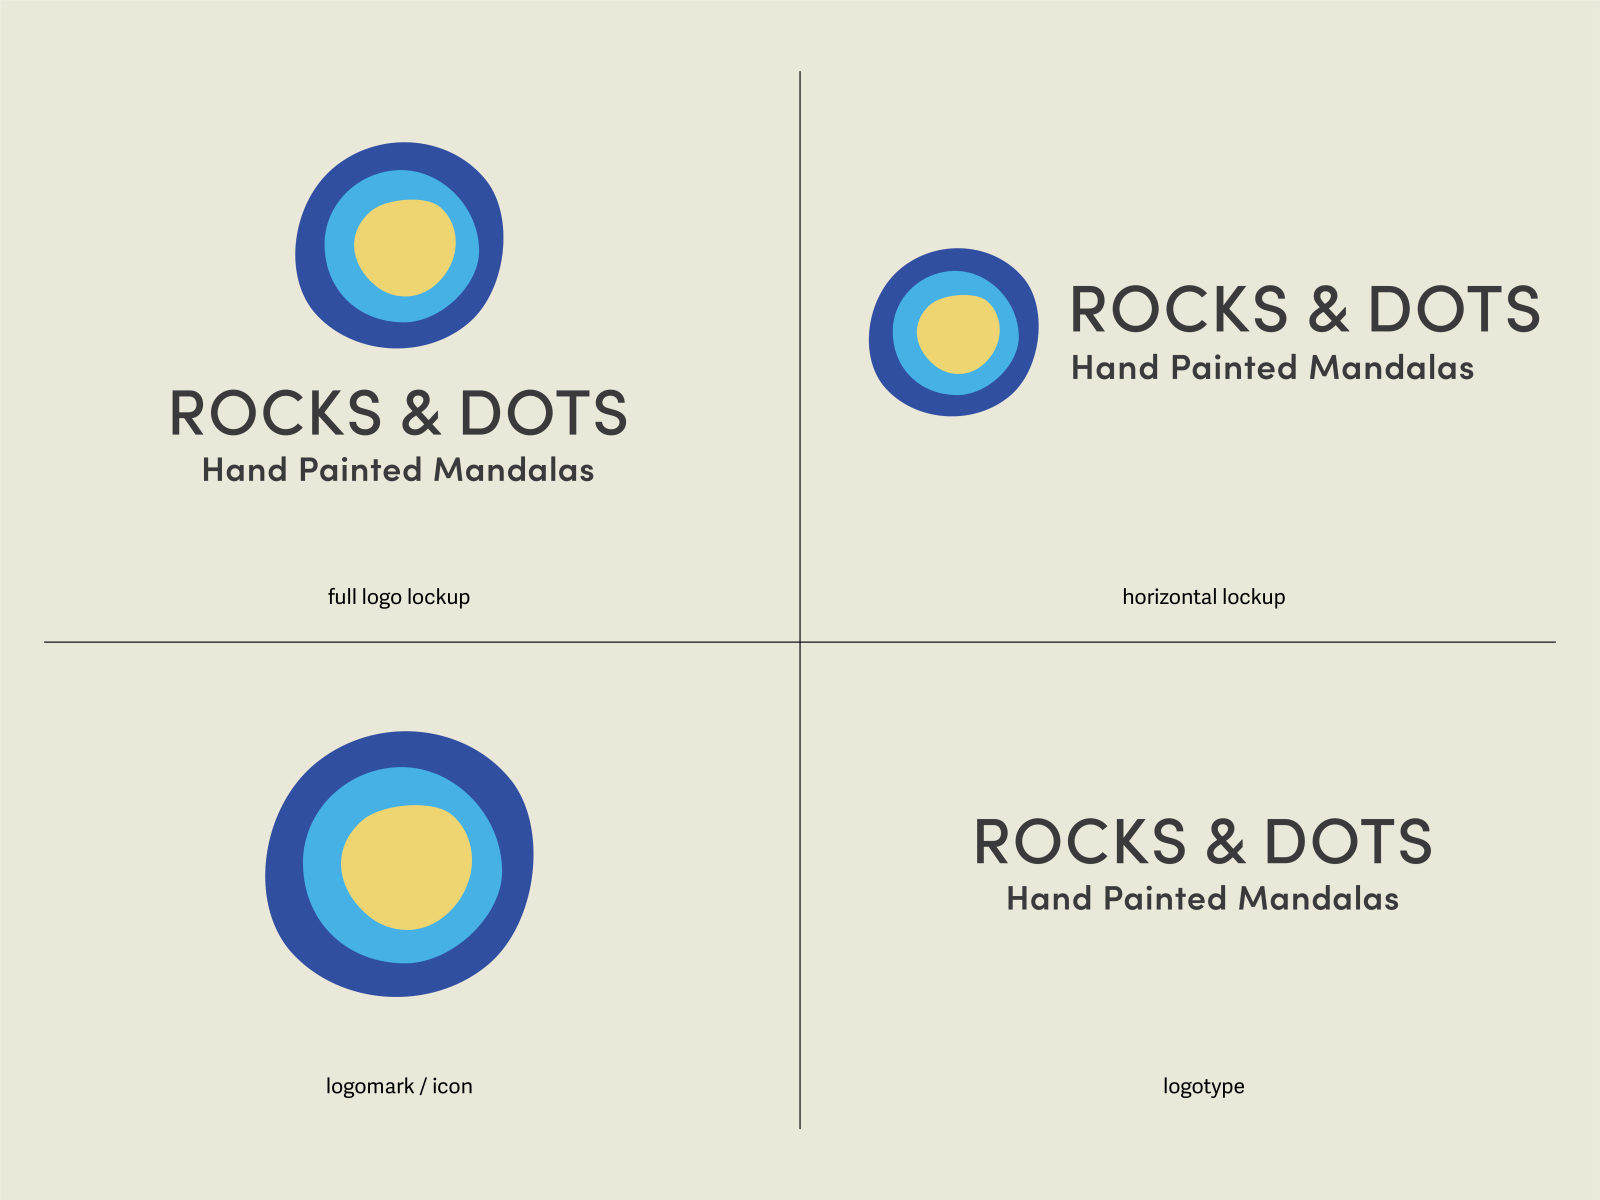 Rocks & Dots: Final Logo Lockups